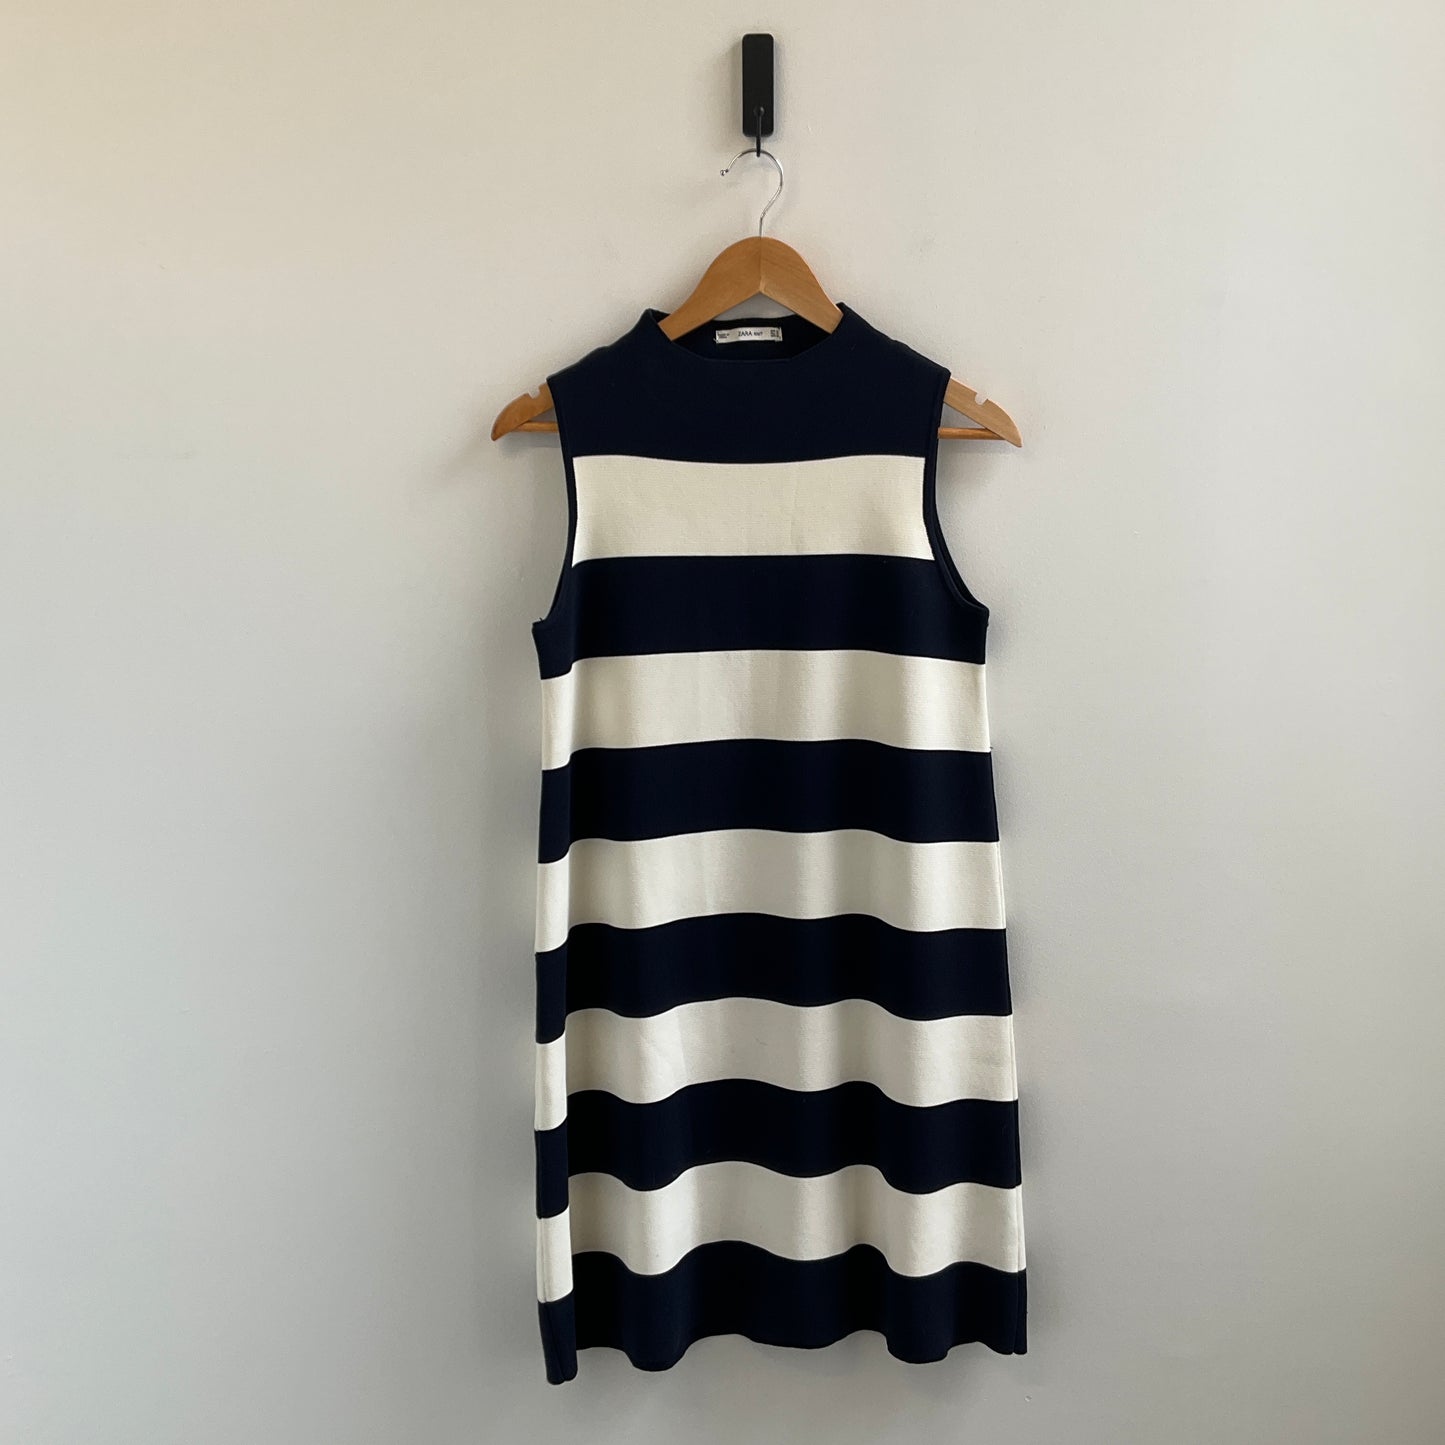 Zara Knit - Striped Knit Dress